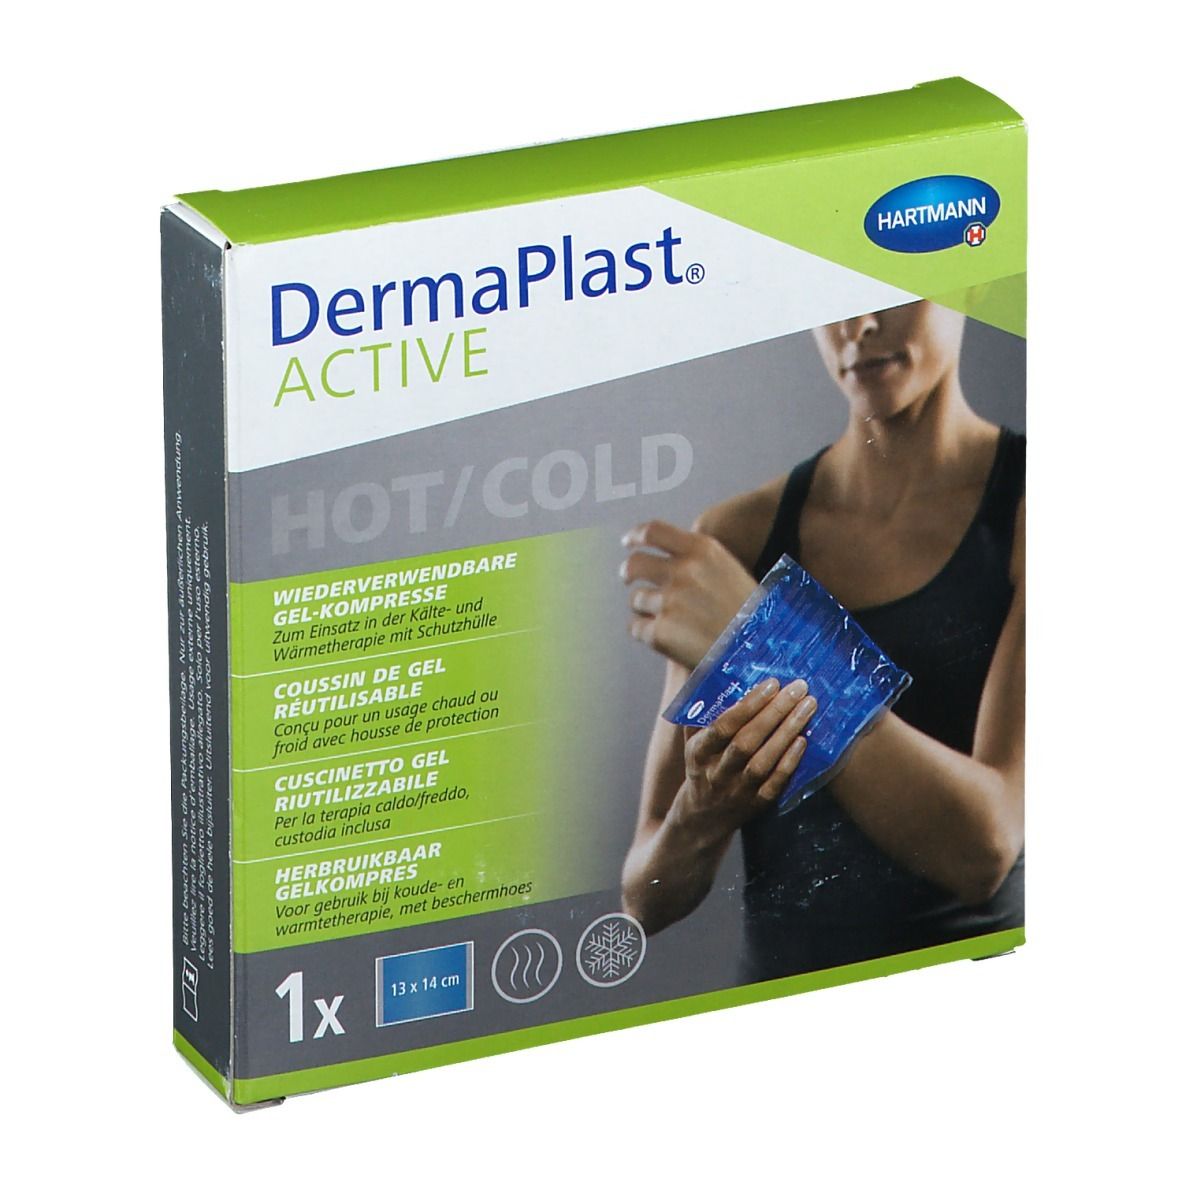 Dermaplast® Active chaud/froid 13 x 14 cm